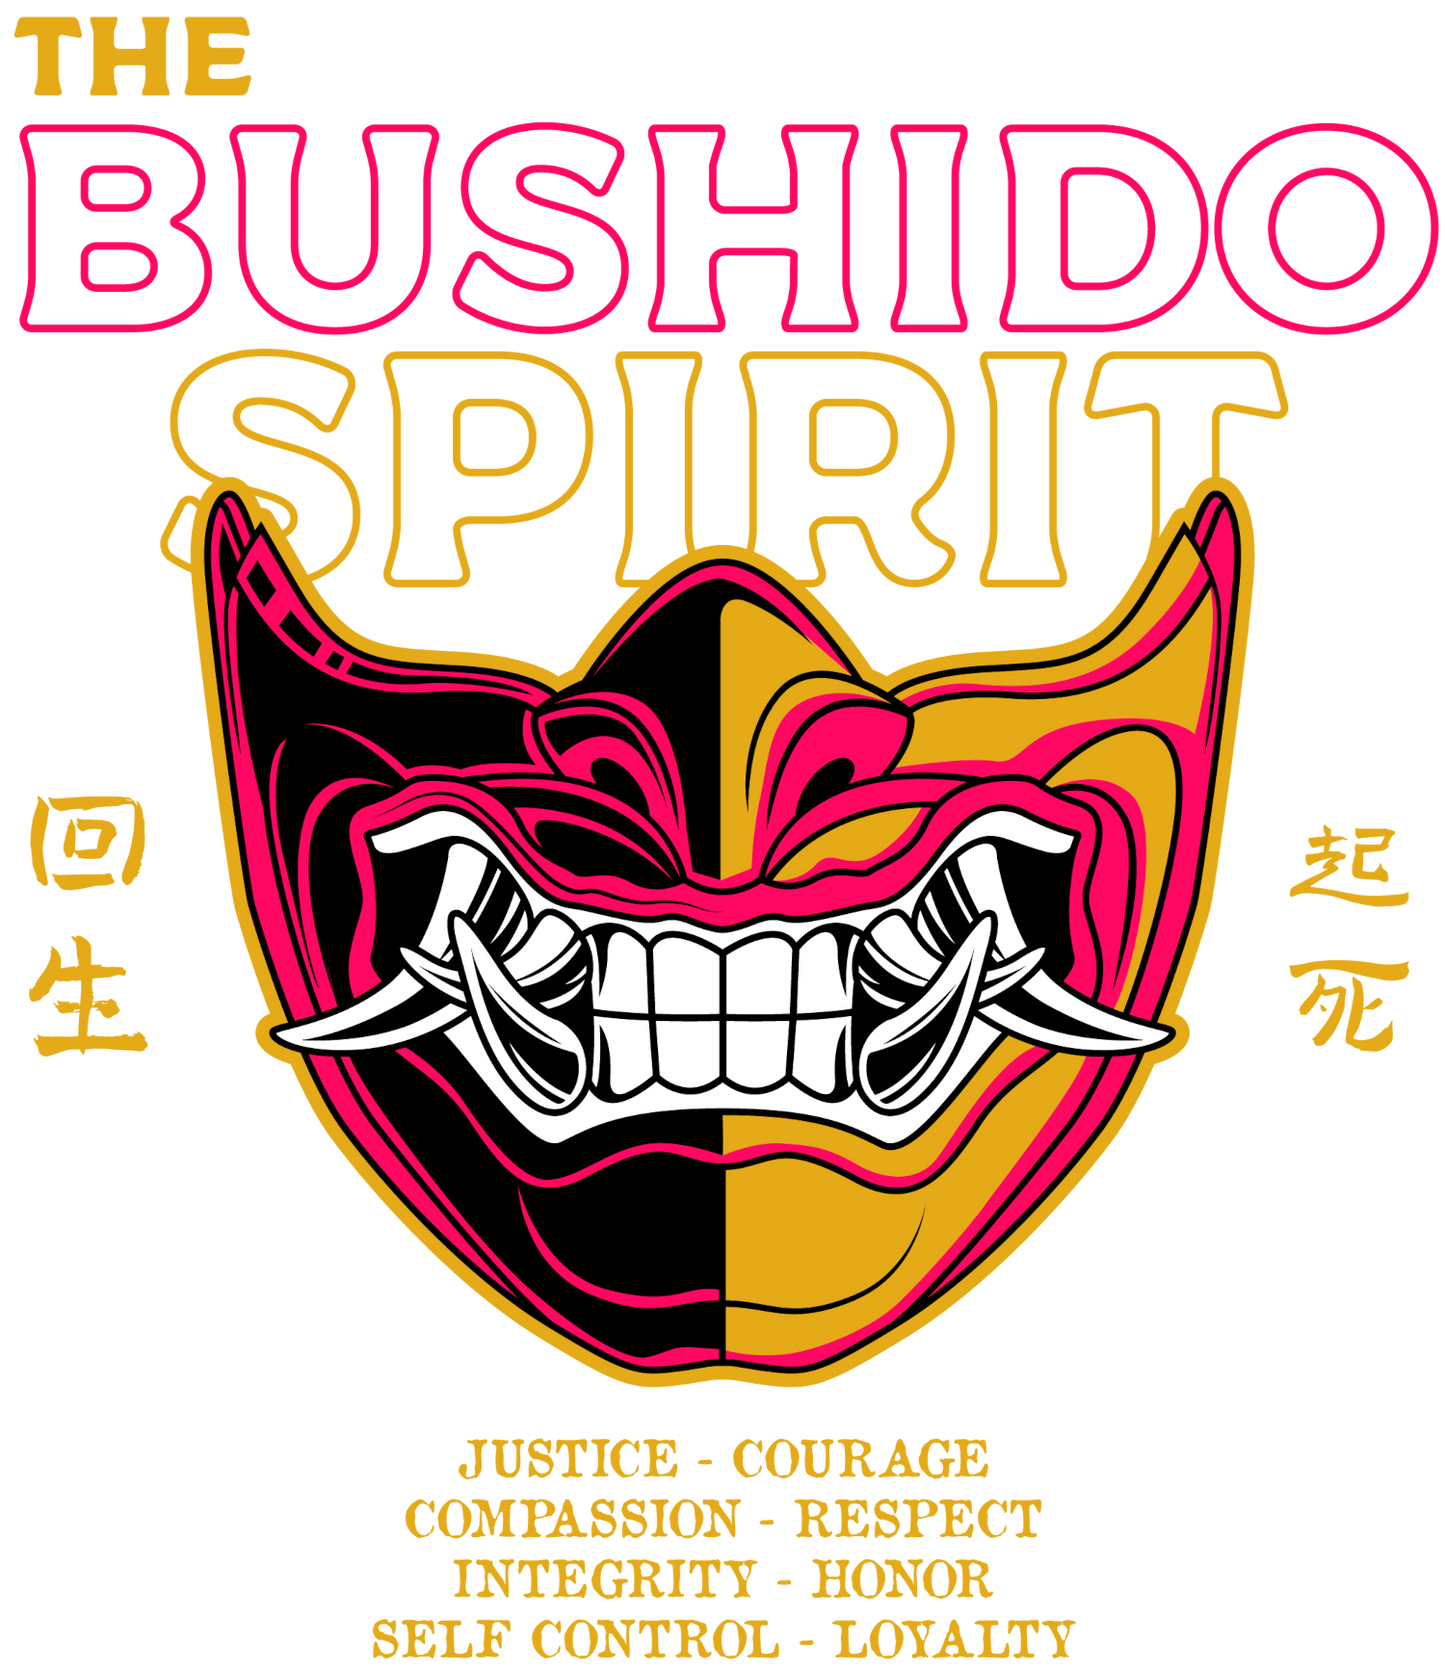 The Bushido Spirit